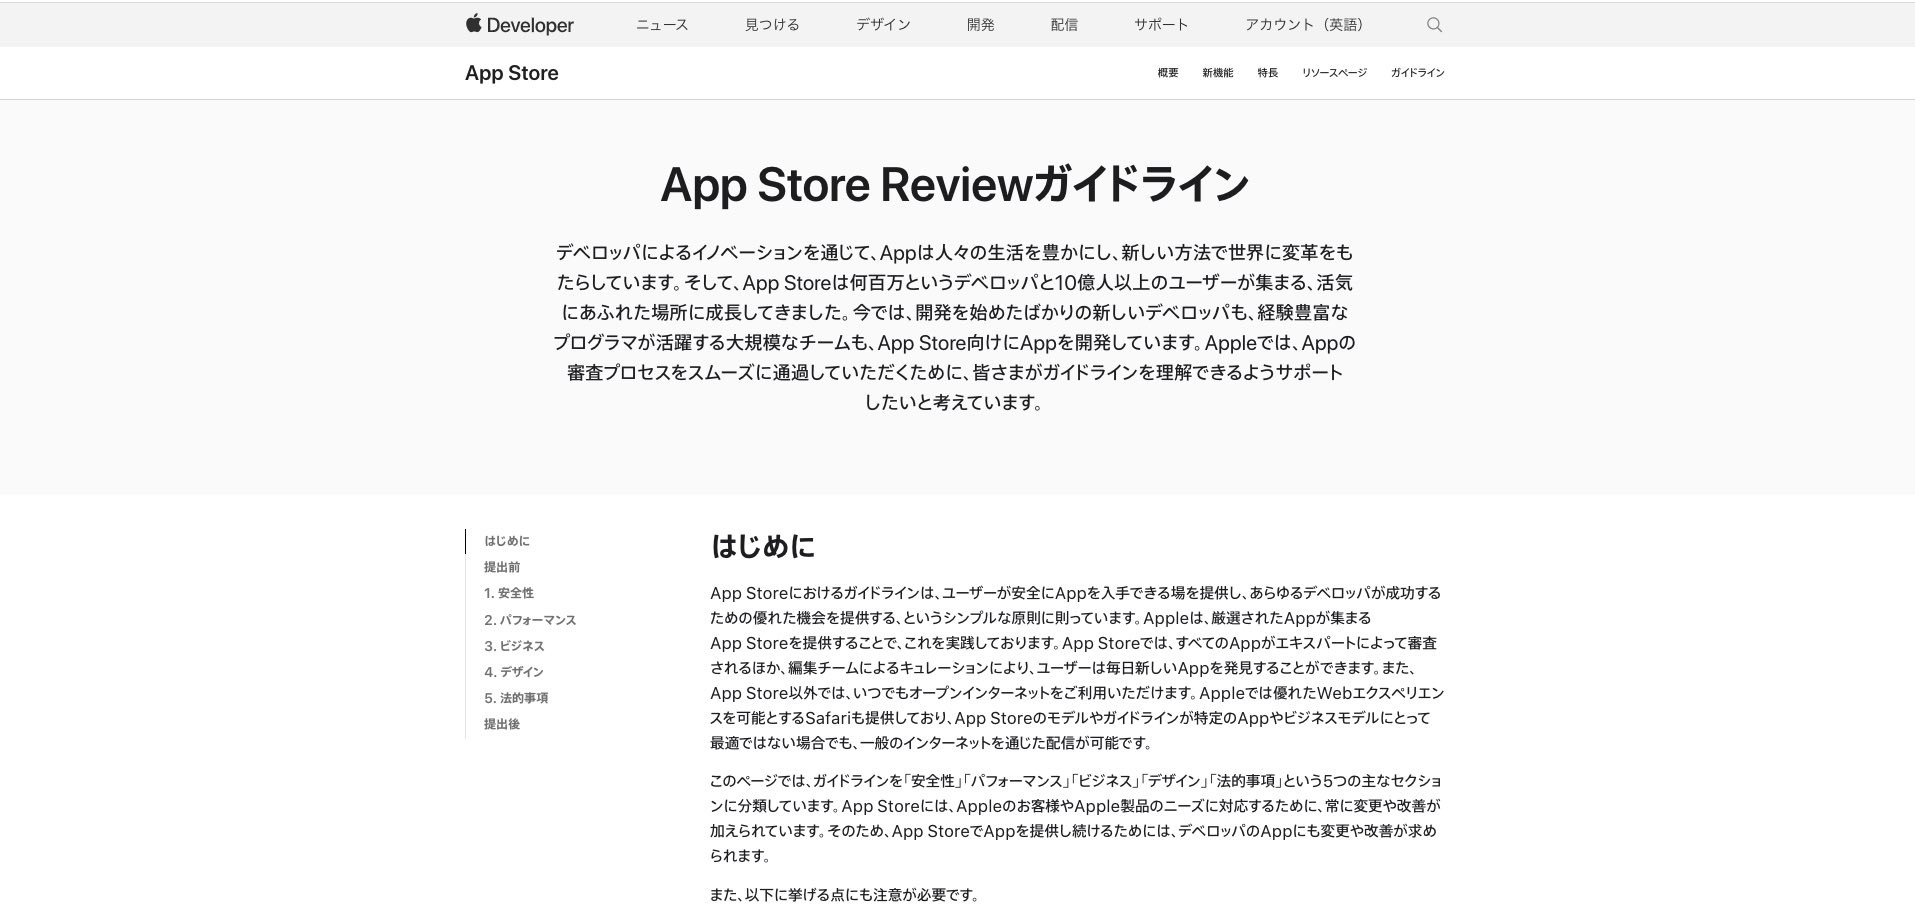 App Store Reviewガイドライン